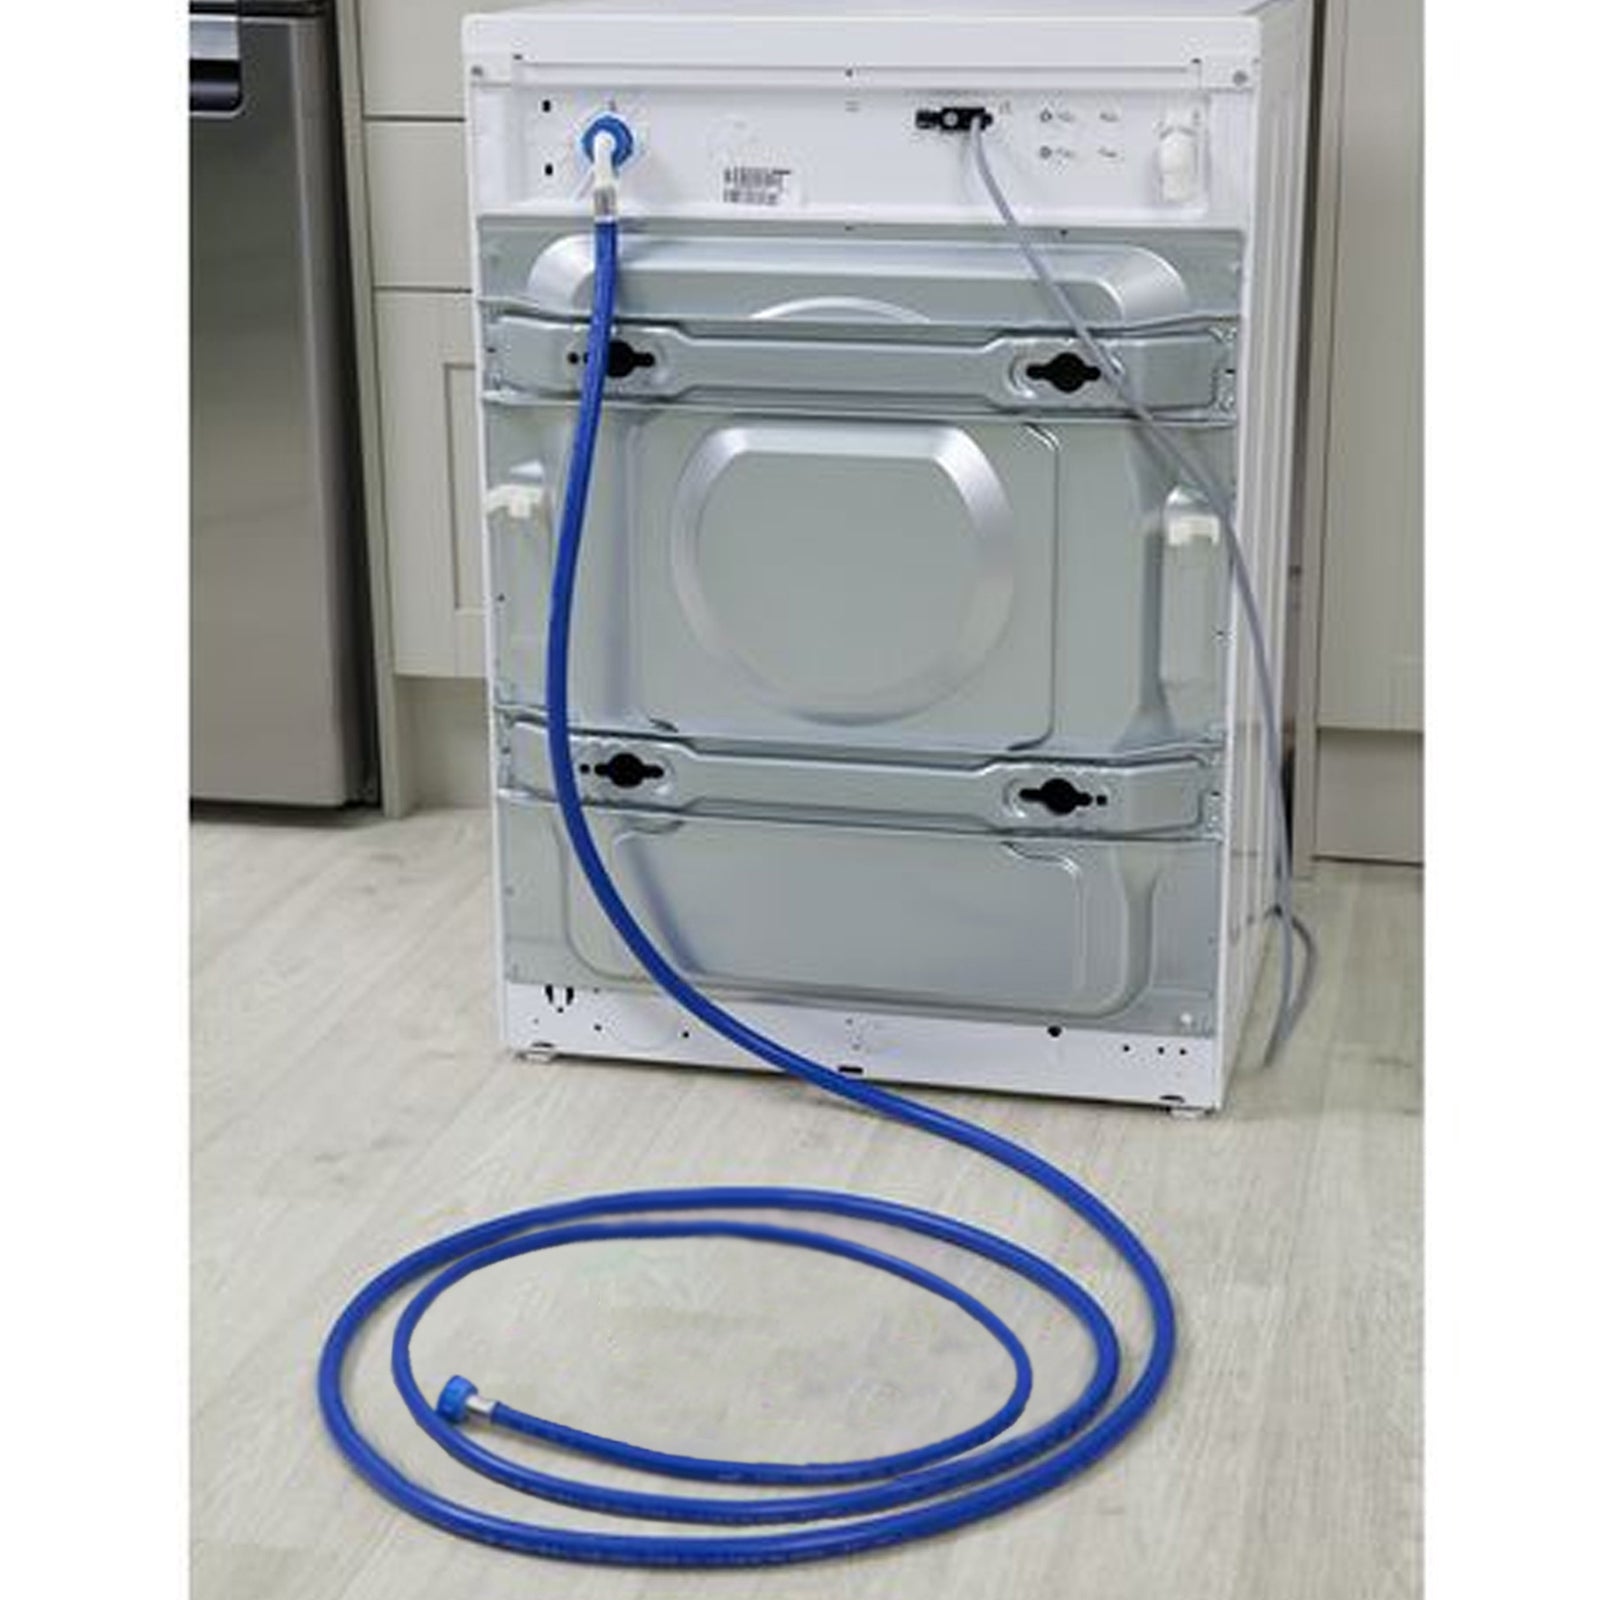 Fill Hose + Drain Hose Extension Set for PANASONIC IKEA LG Washing Machine & Dishwasher 2.5m + 5m